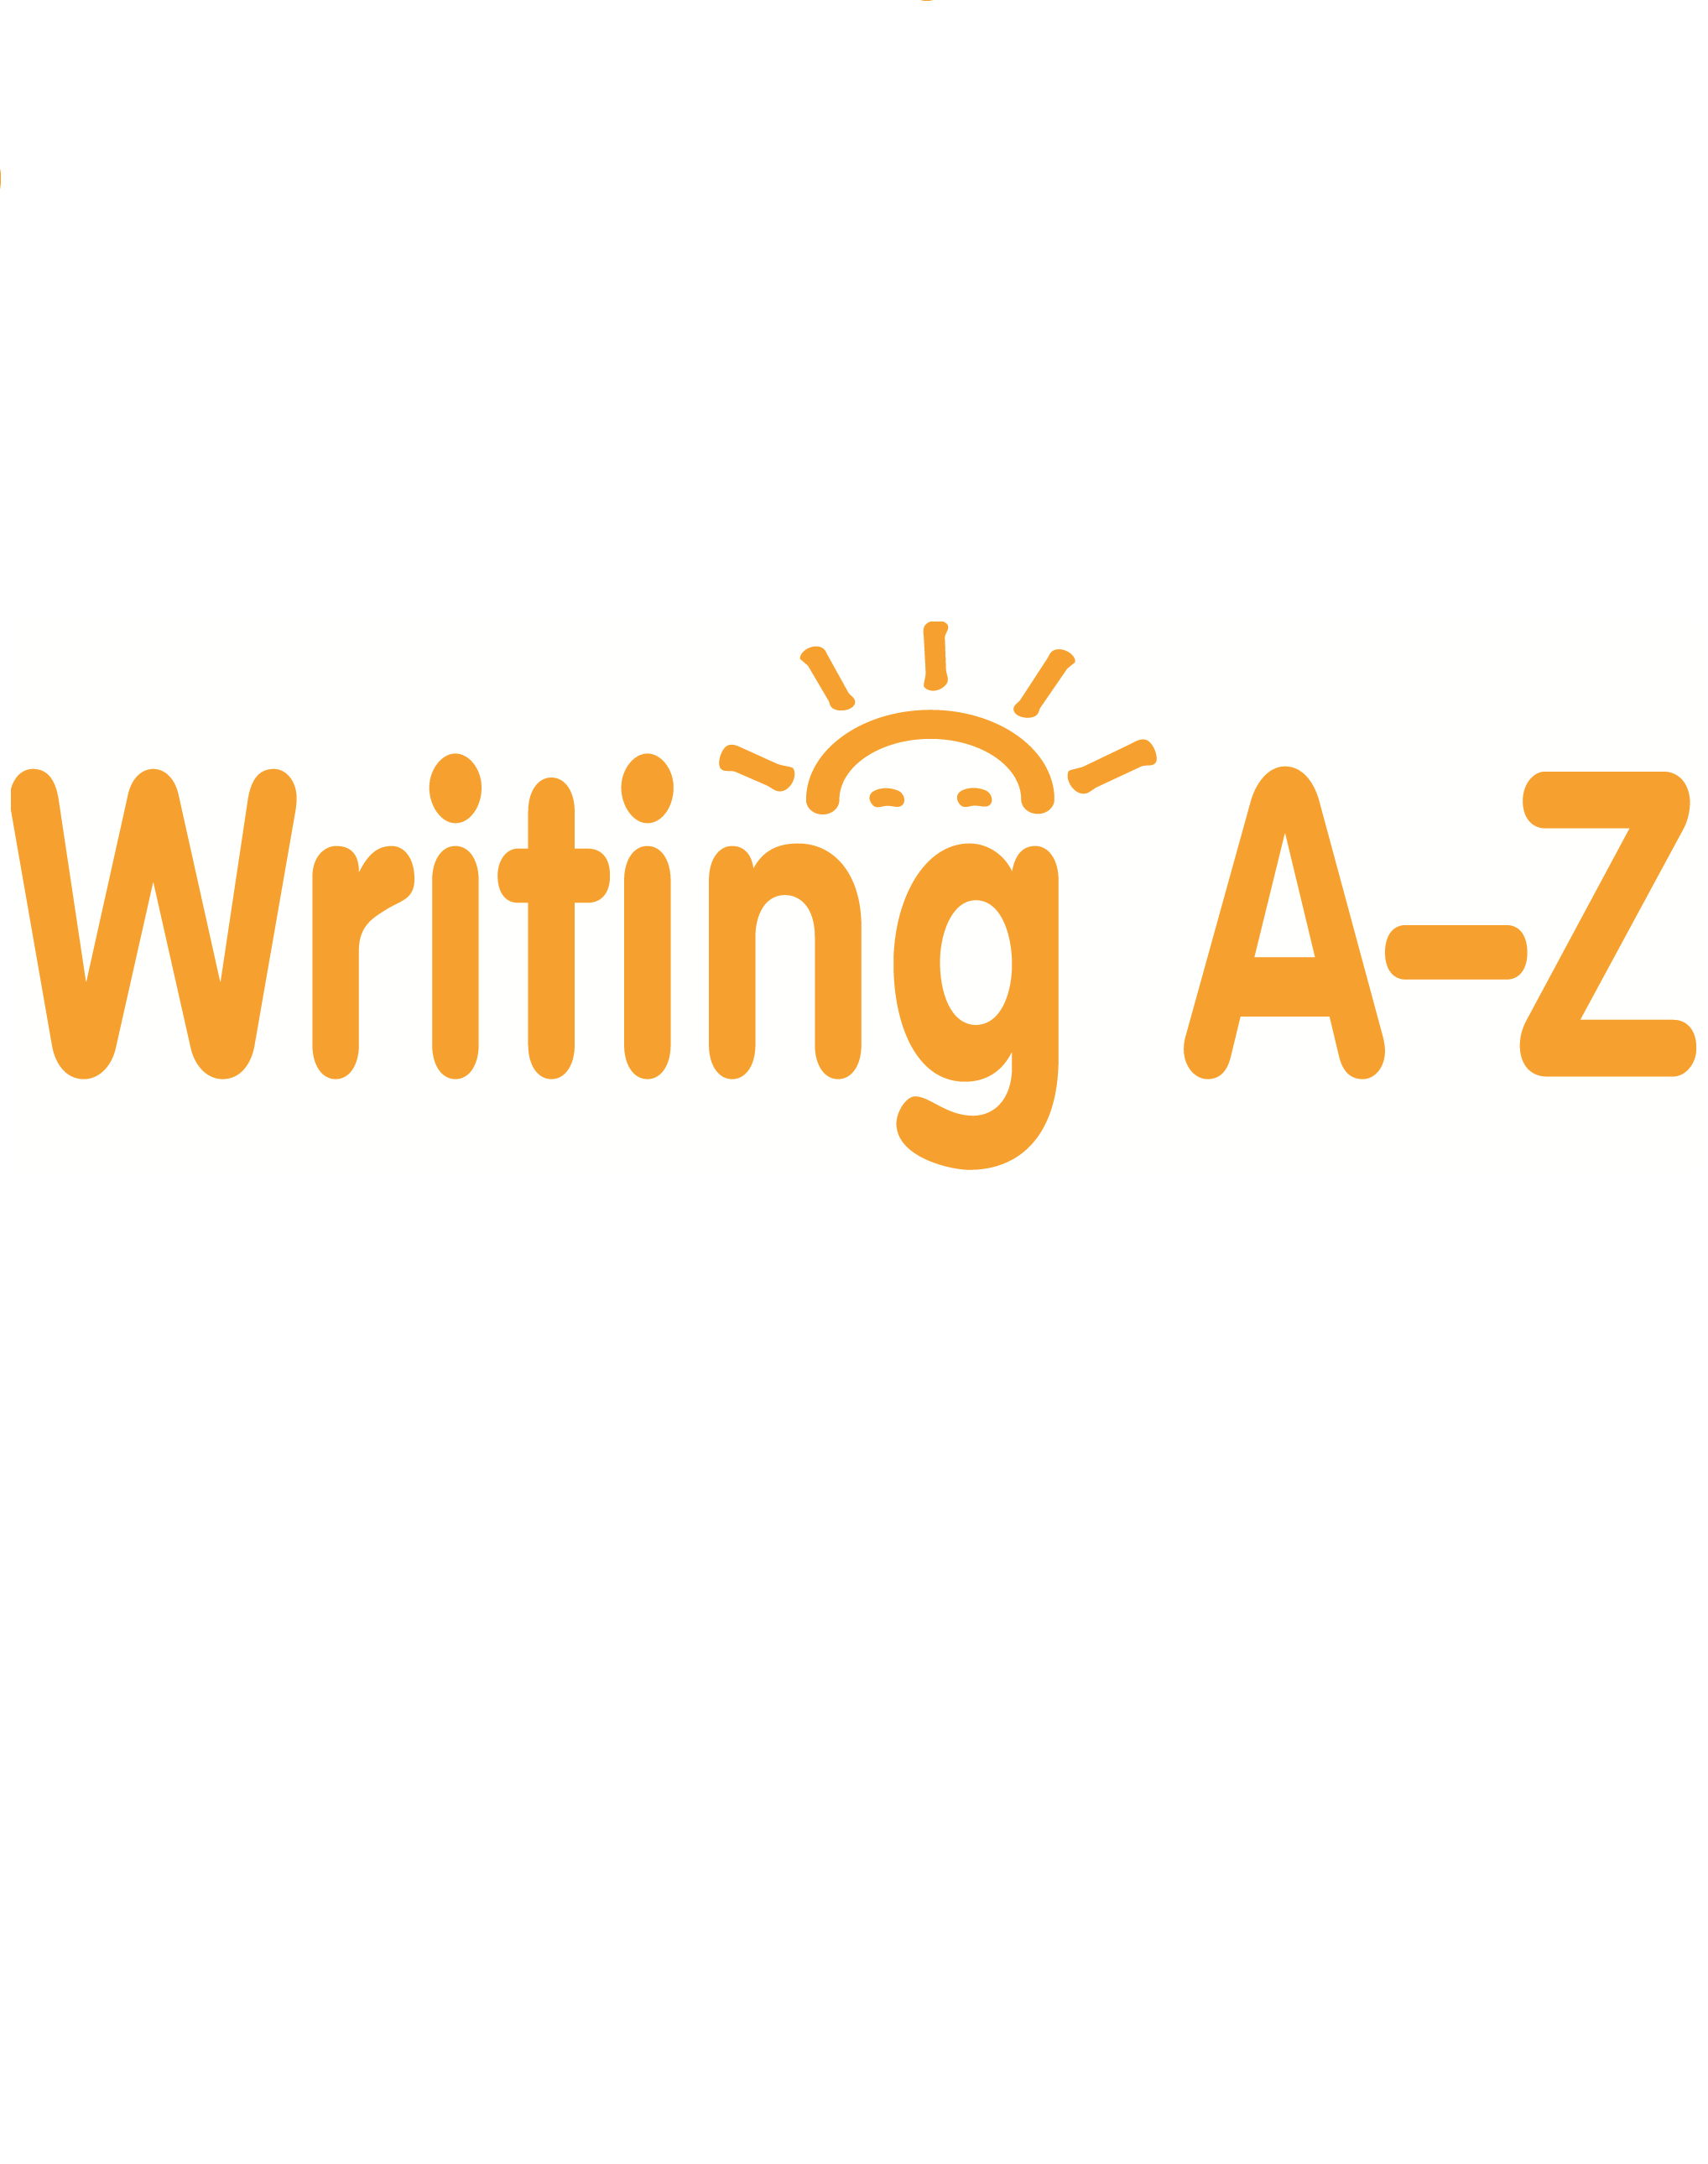 Learning A-Z's Writing A-Z